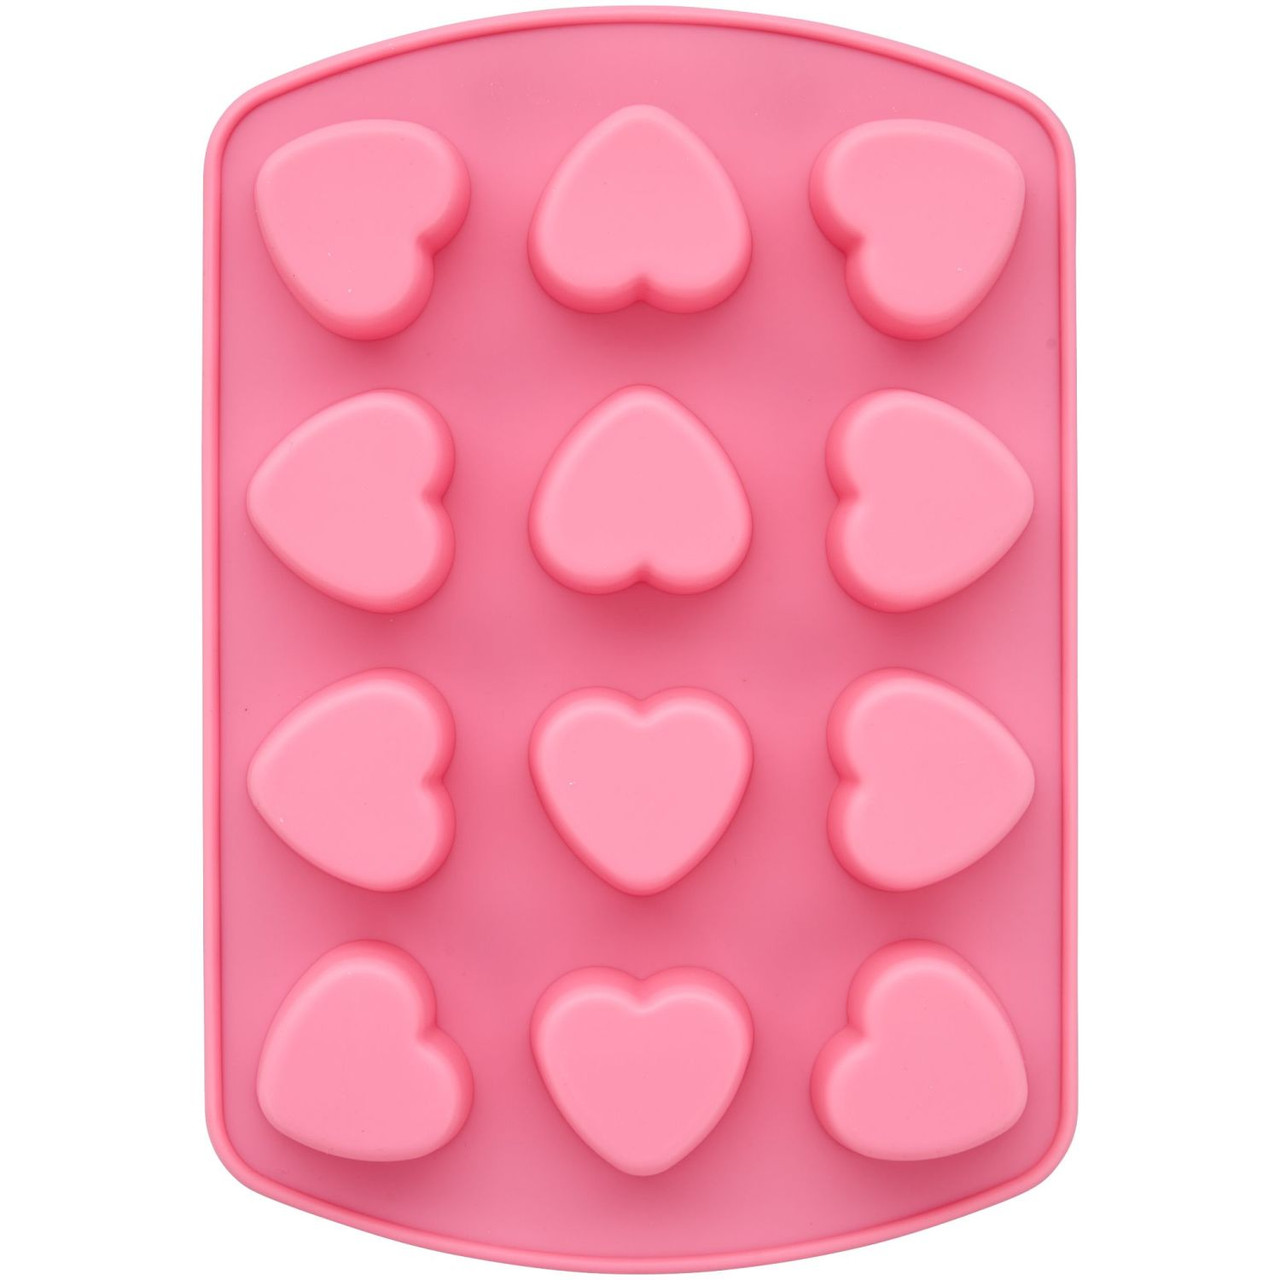  Wilton Mini Hearts Silicone Mold, 12-Cavity - Heart